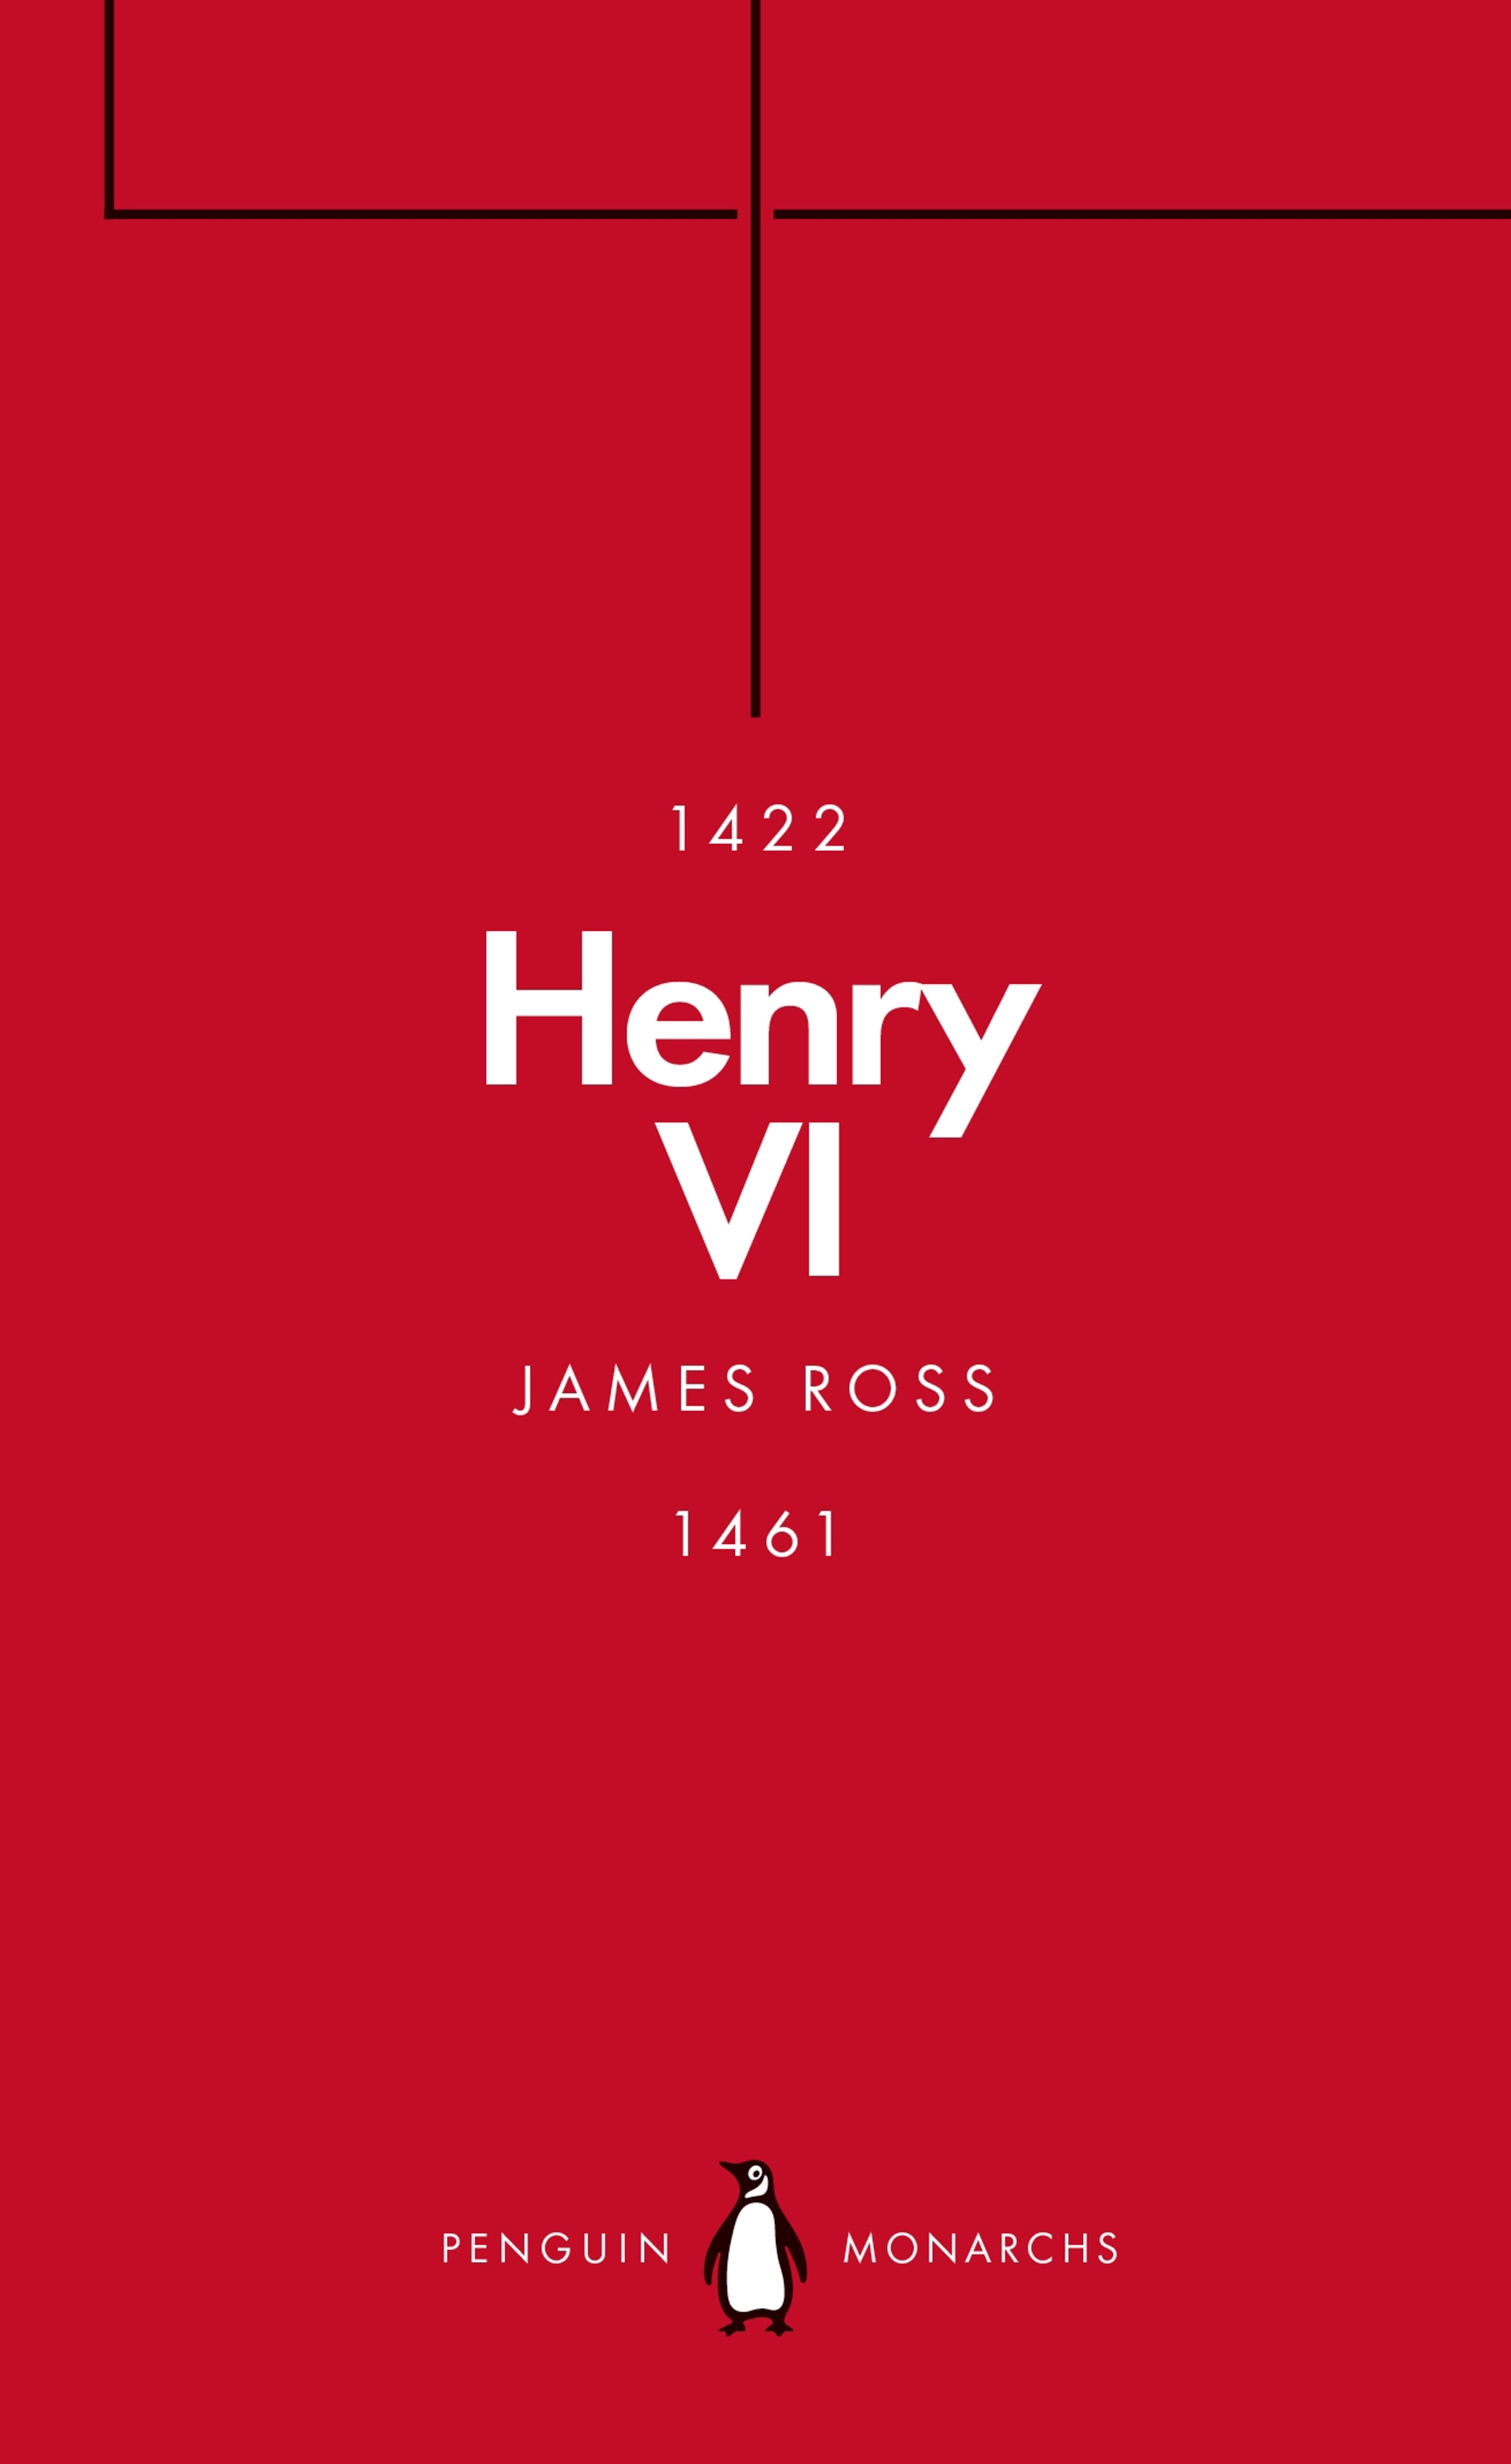 Book “Henry VI (Penguin Monarchs)” by James Ross — July 4, 2019